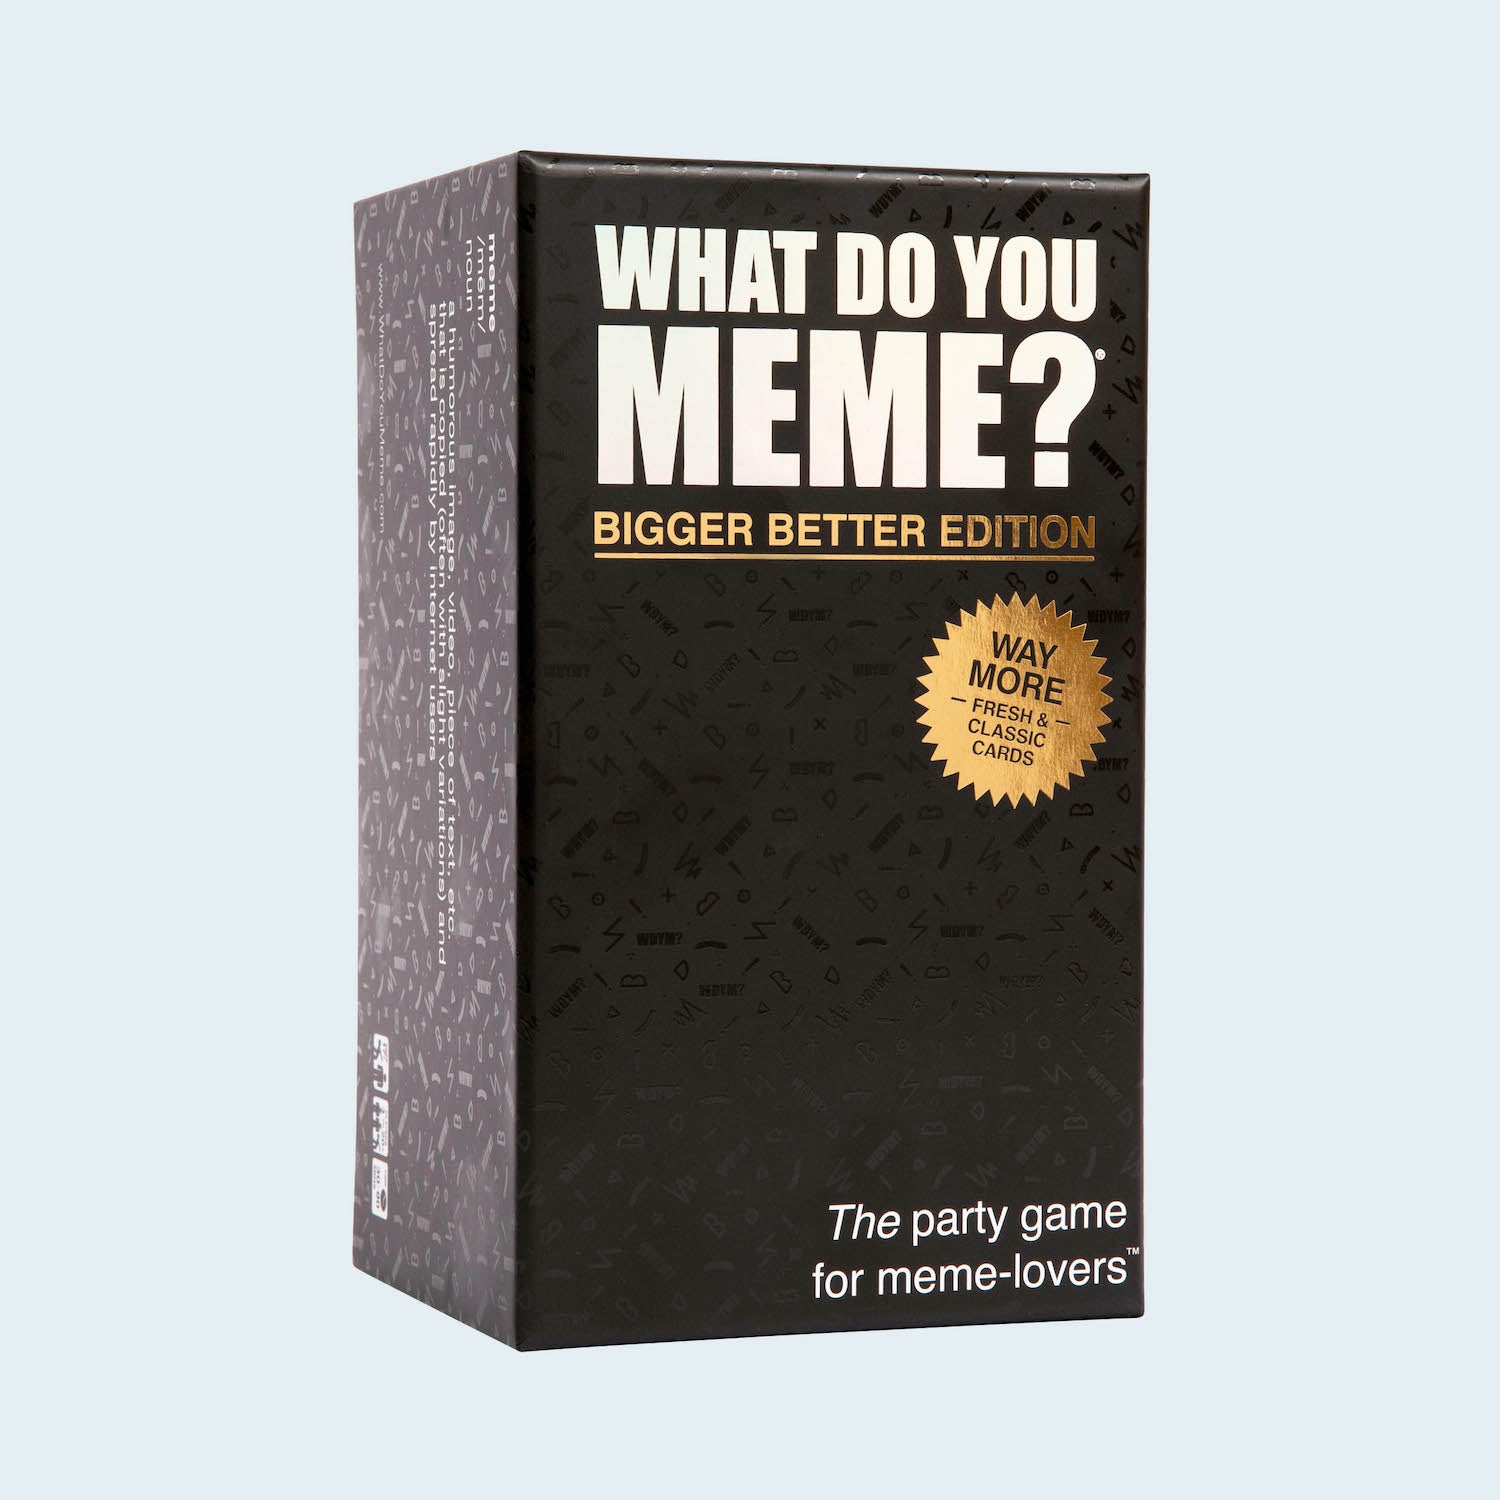 Make it Meme - The online meme party game